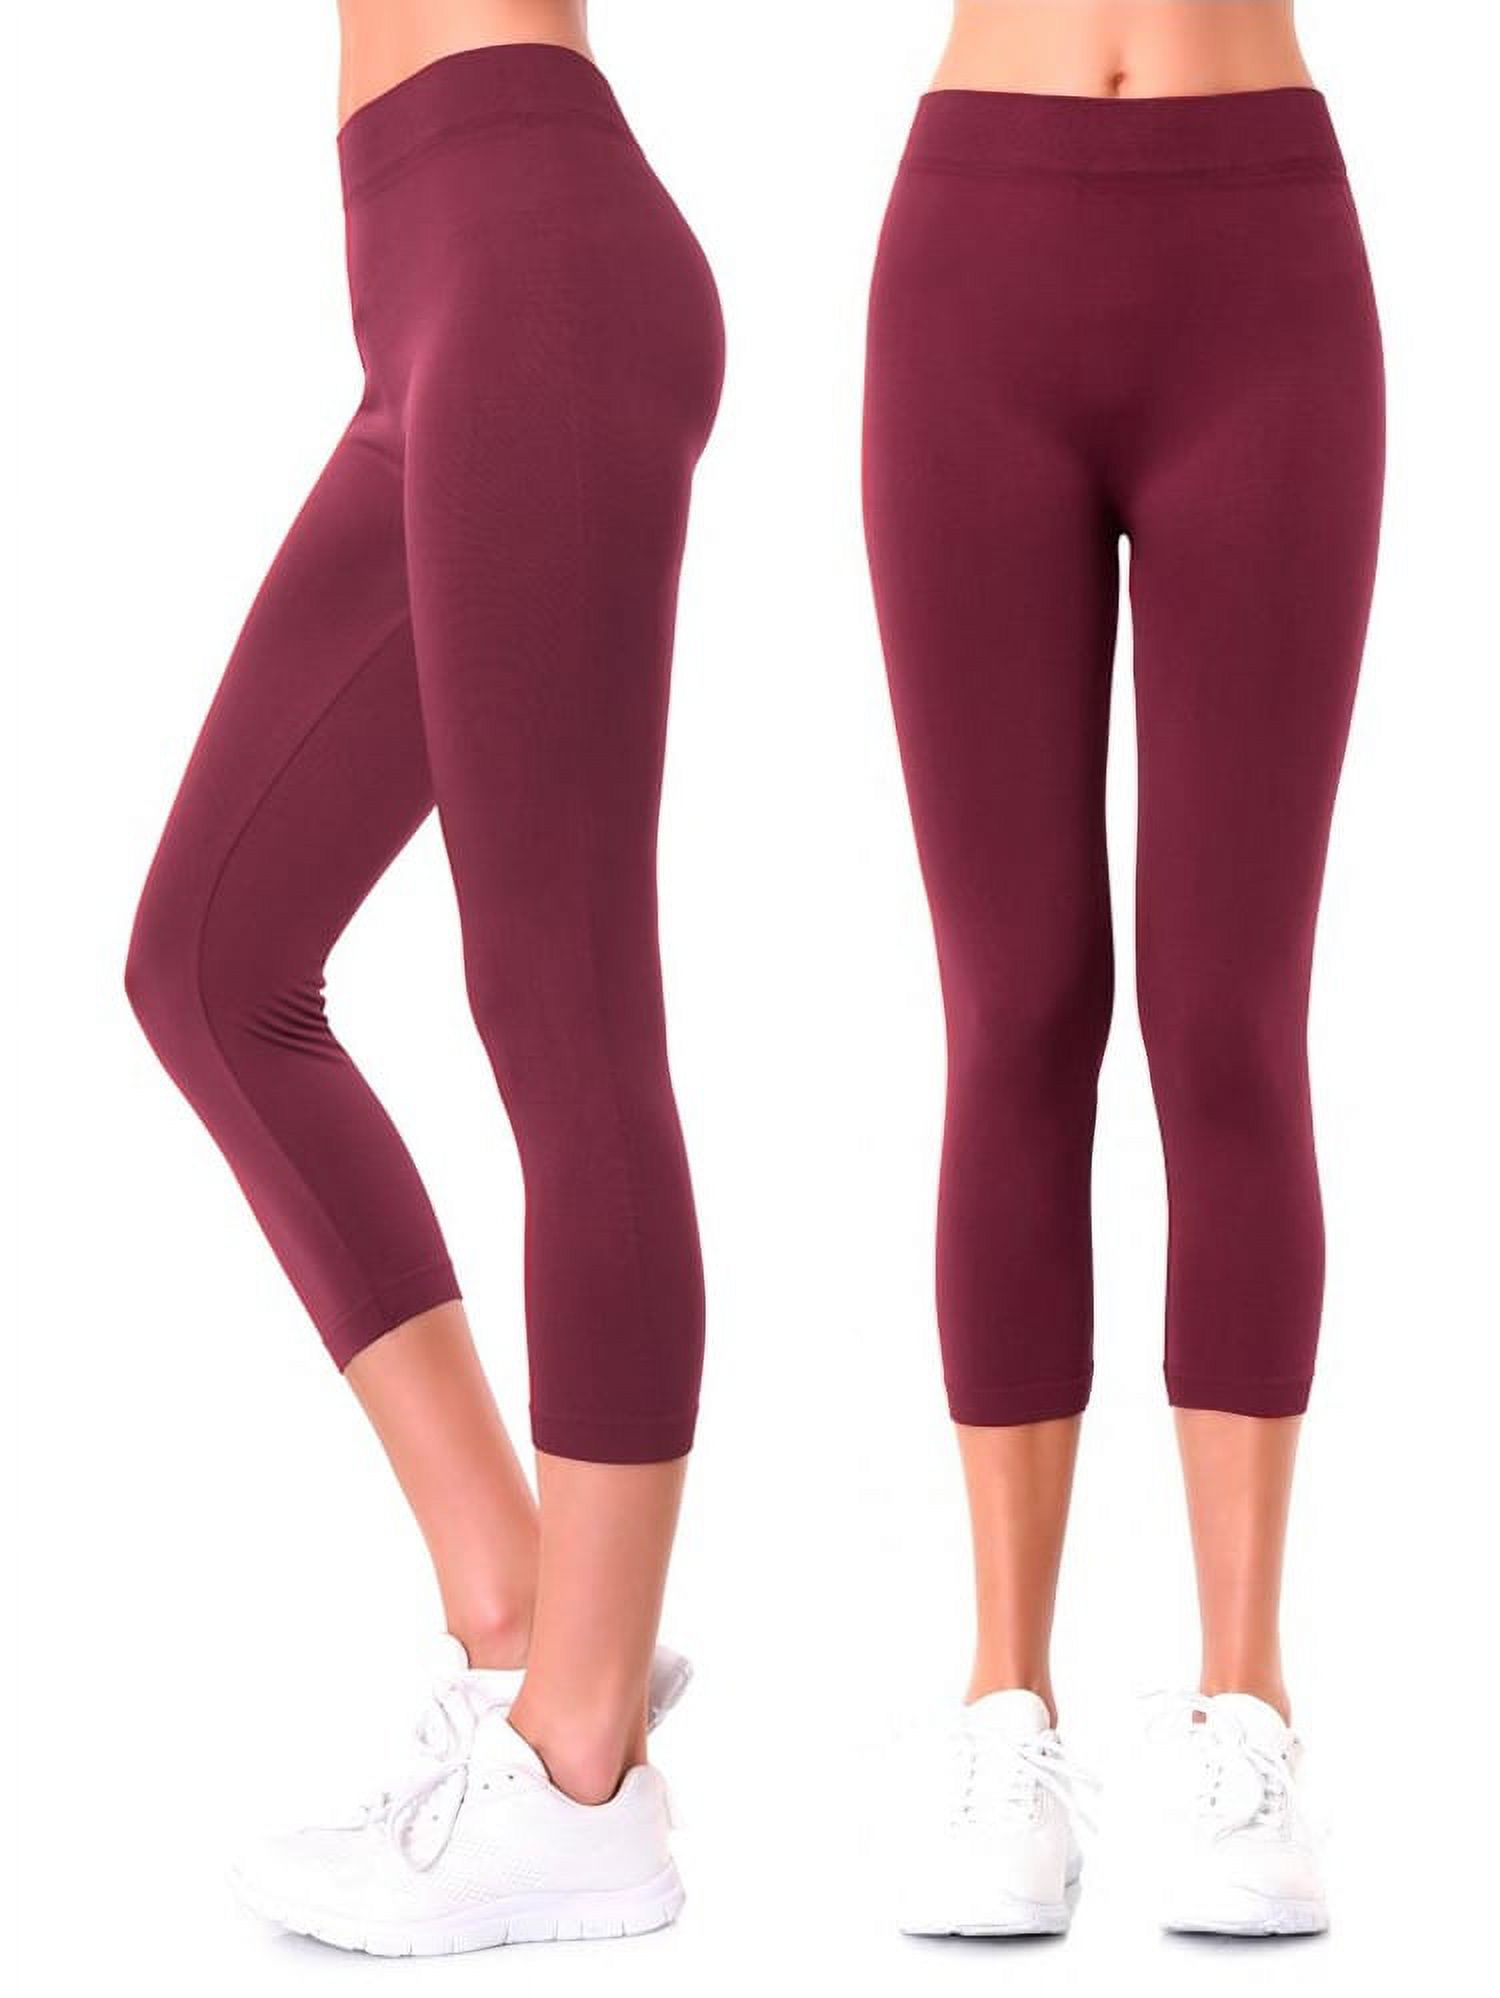 Women Seamless Plus One Size Footless Stretch Yoga Pants Capri Leggings Burgundy - image 5 of 7